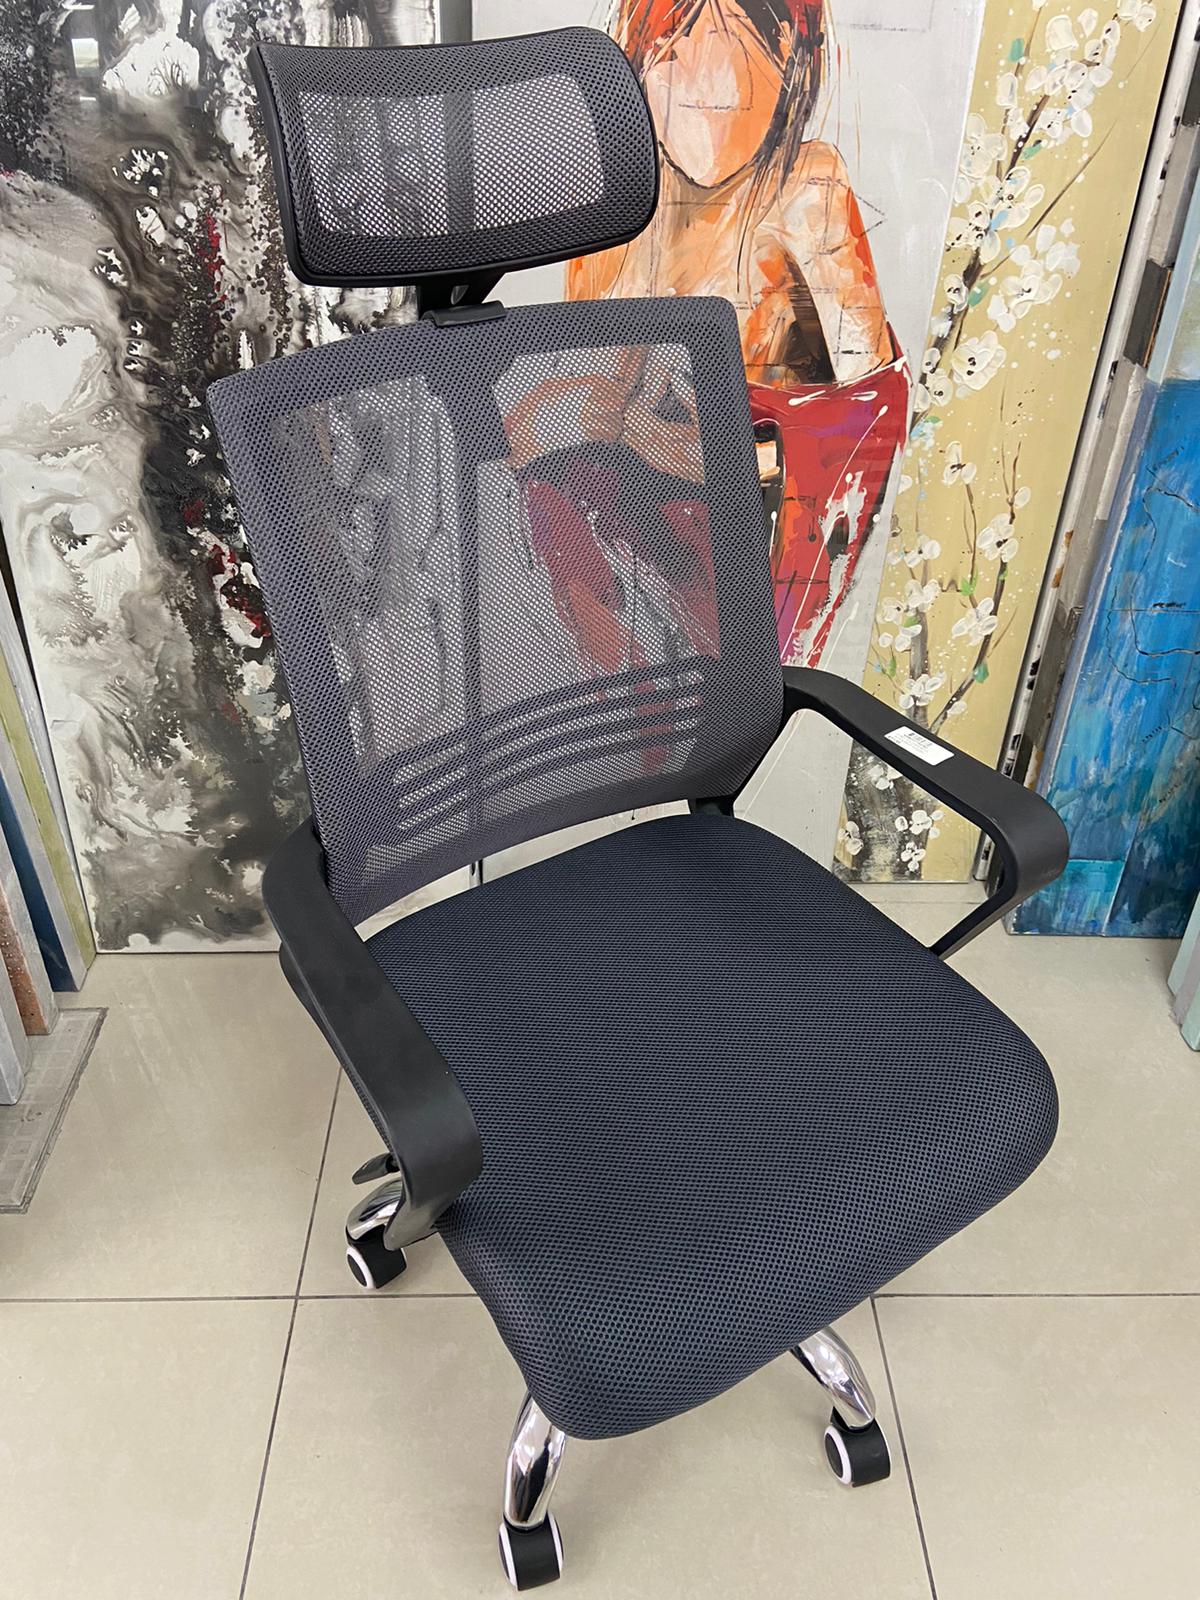 Desk chair with headrest